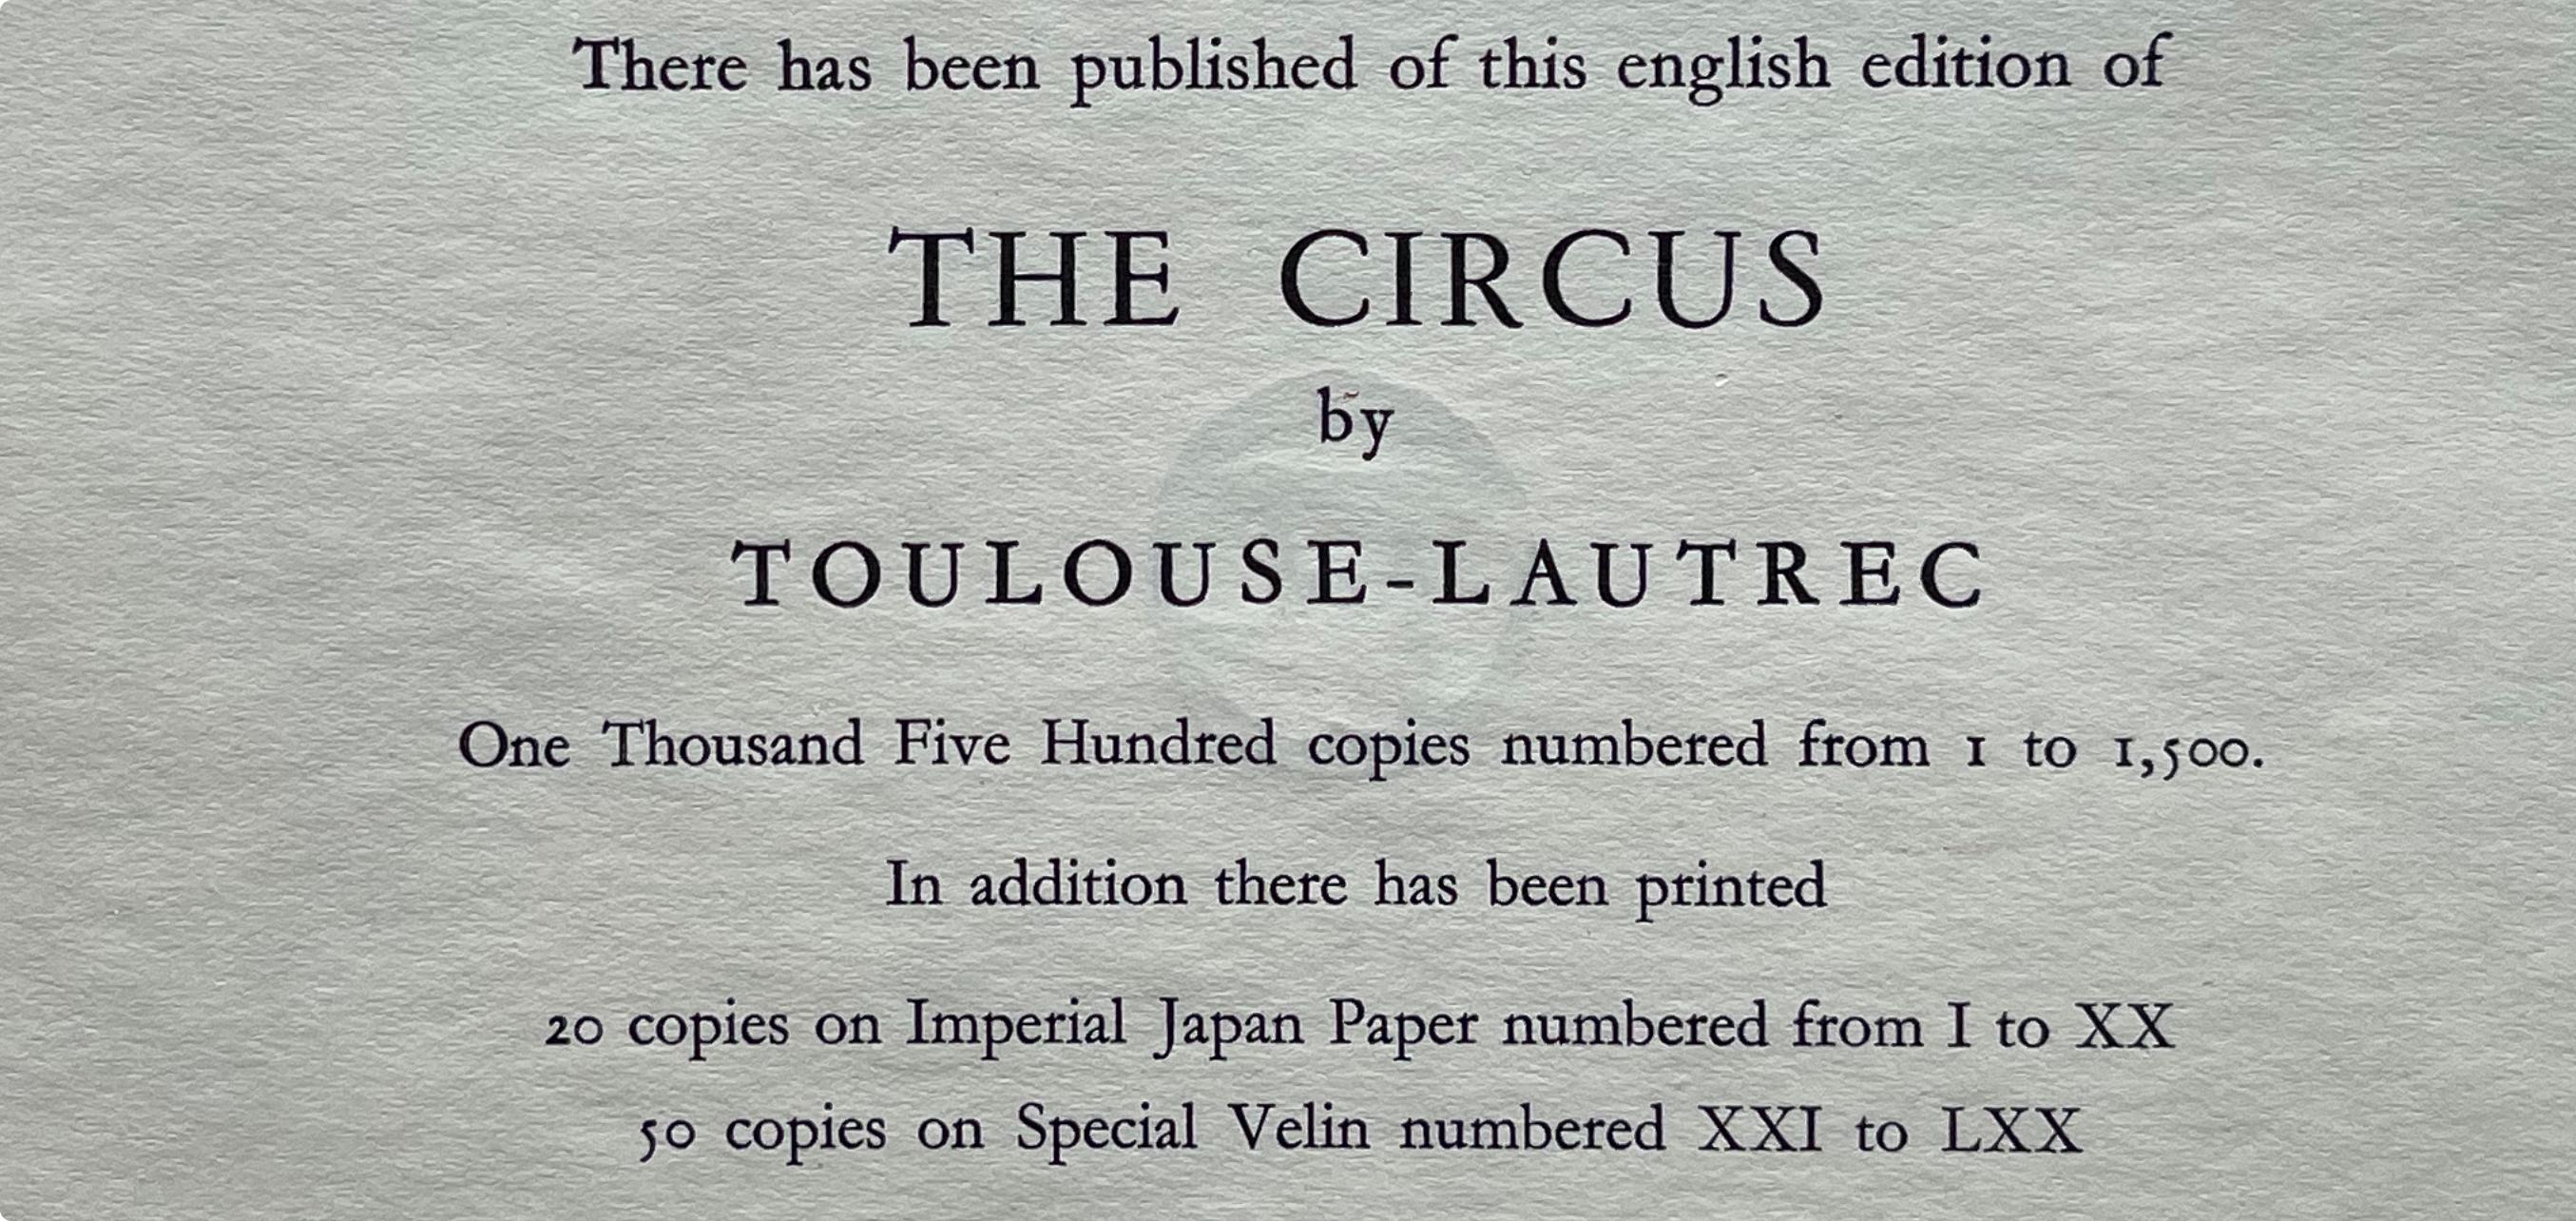 Toulouse-Lautrec, Travail sans selle, The Circus by Toulouse-Lautrec (after) For Sale 3